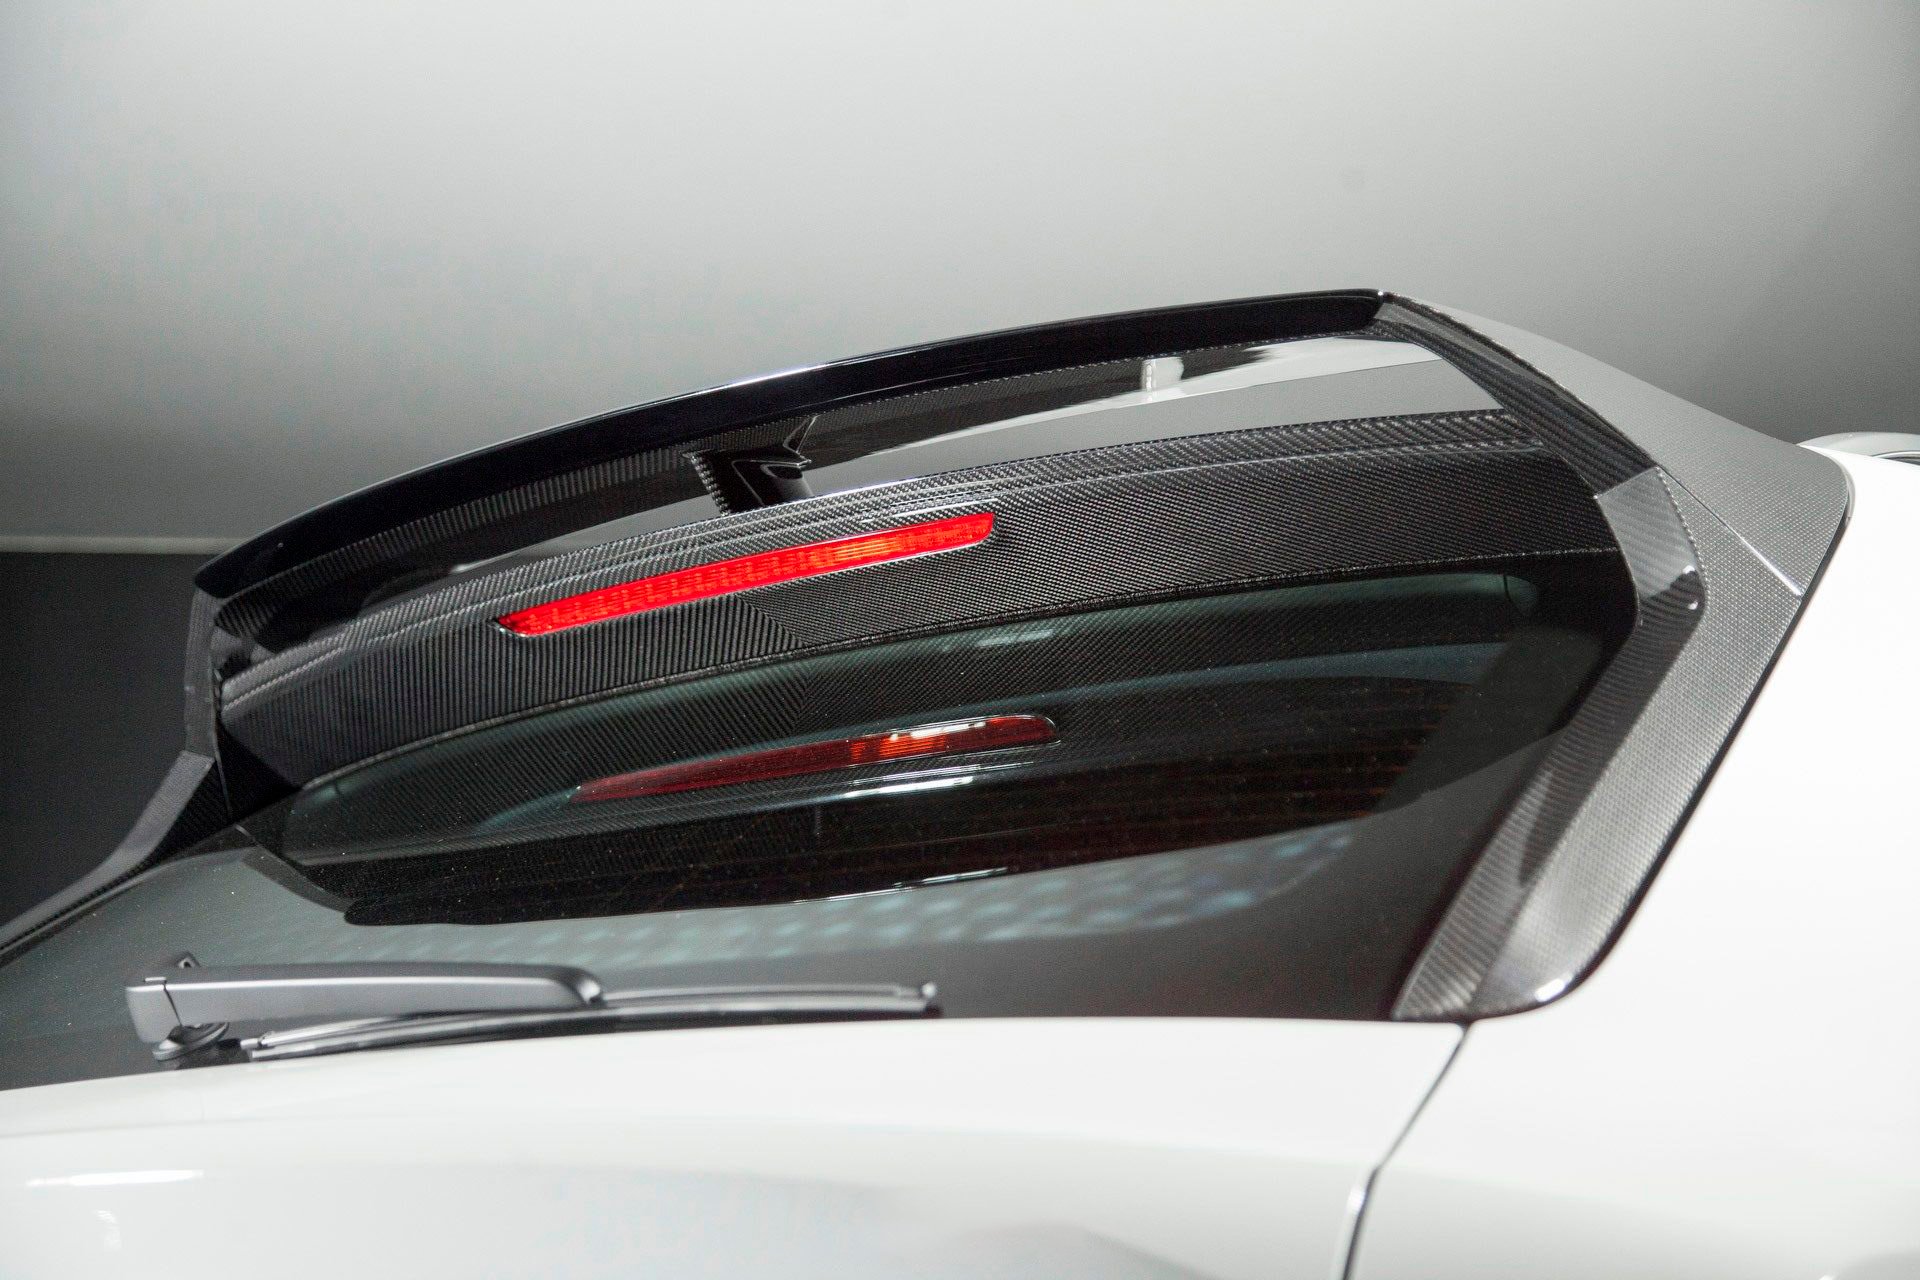 Check price and buy Carbon Fiber Body kit set for Bentley Bentayga